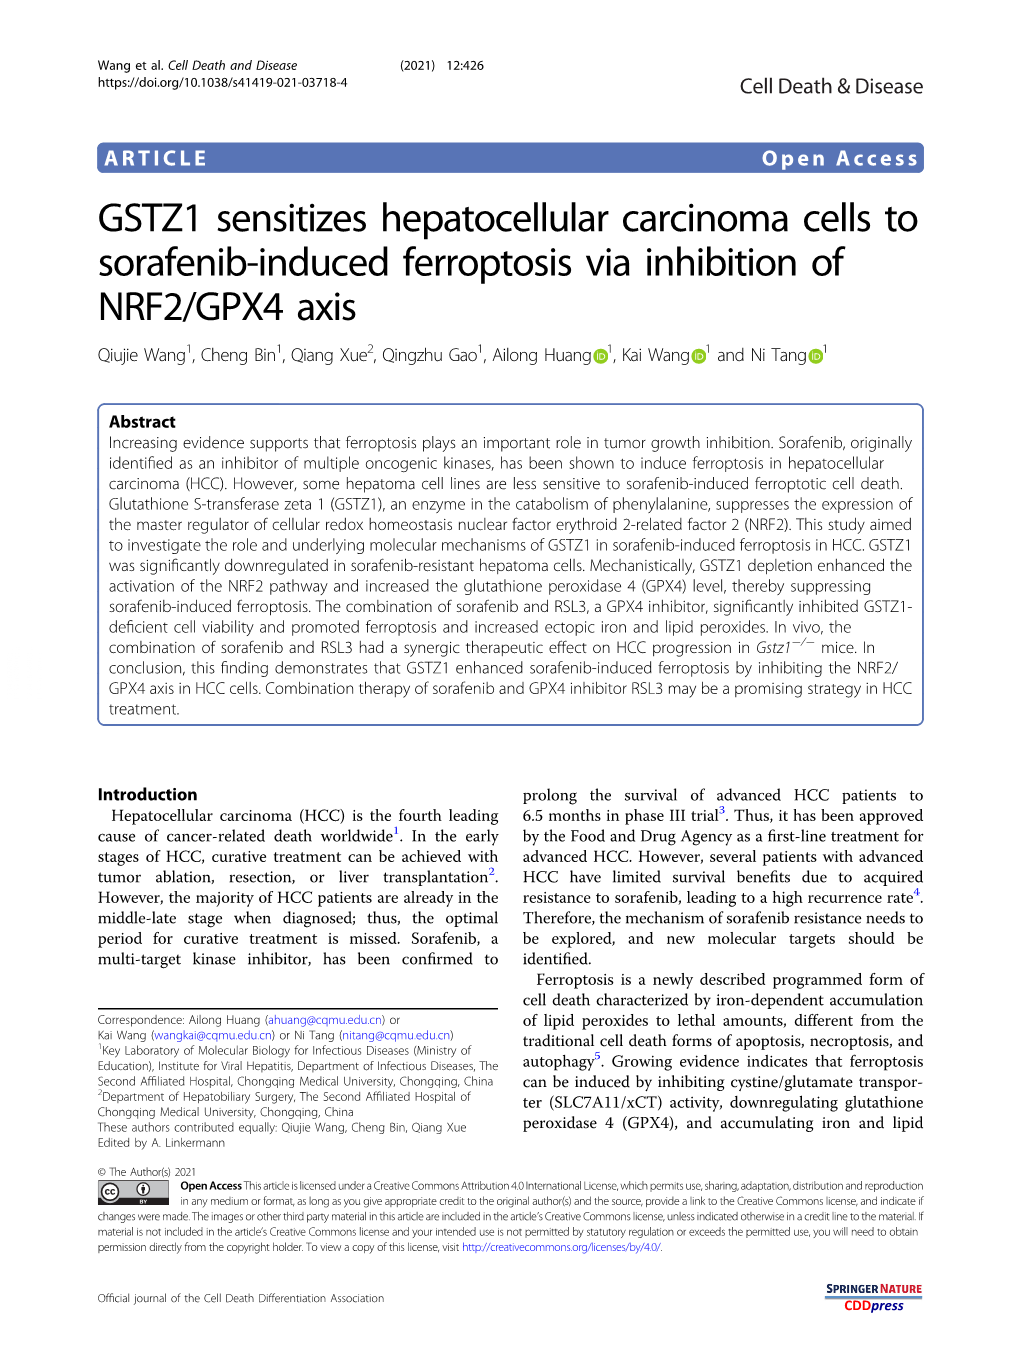 GSTZ1 Sensitizes Hepatocellular Carcinoma Cells to Sorafenib